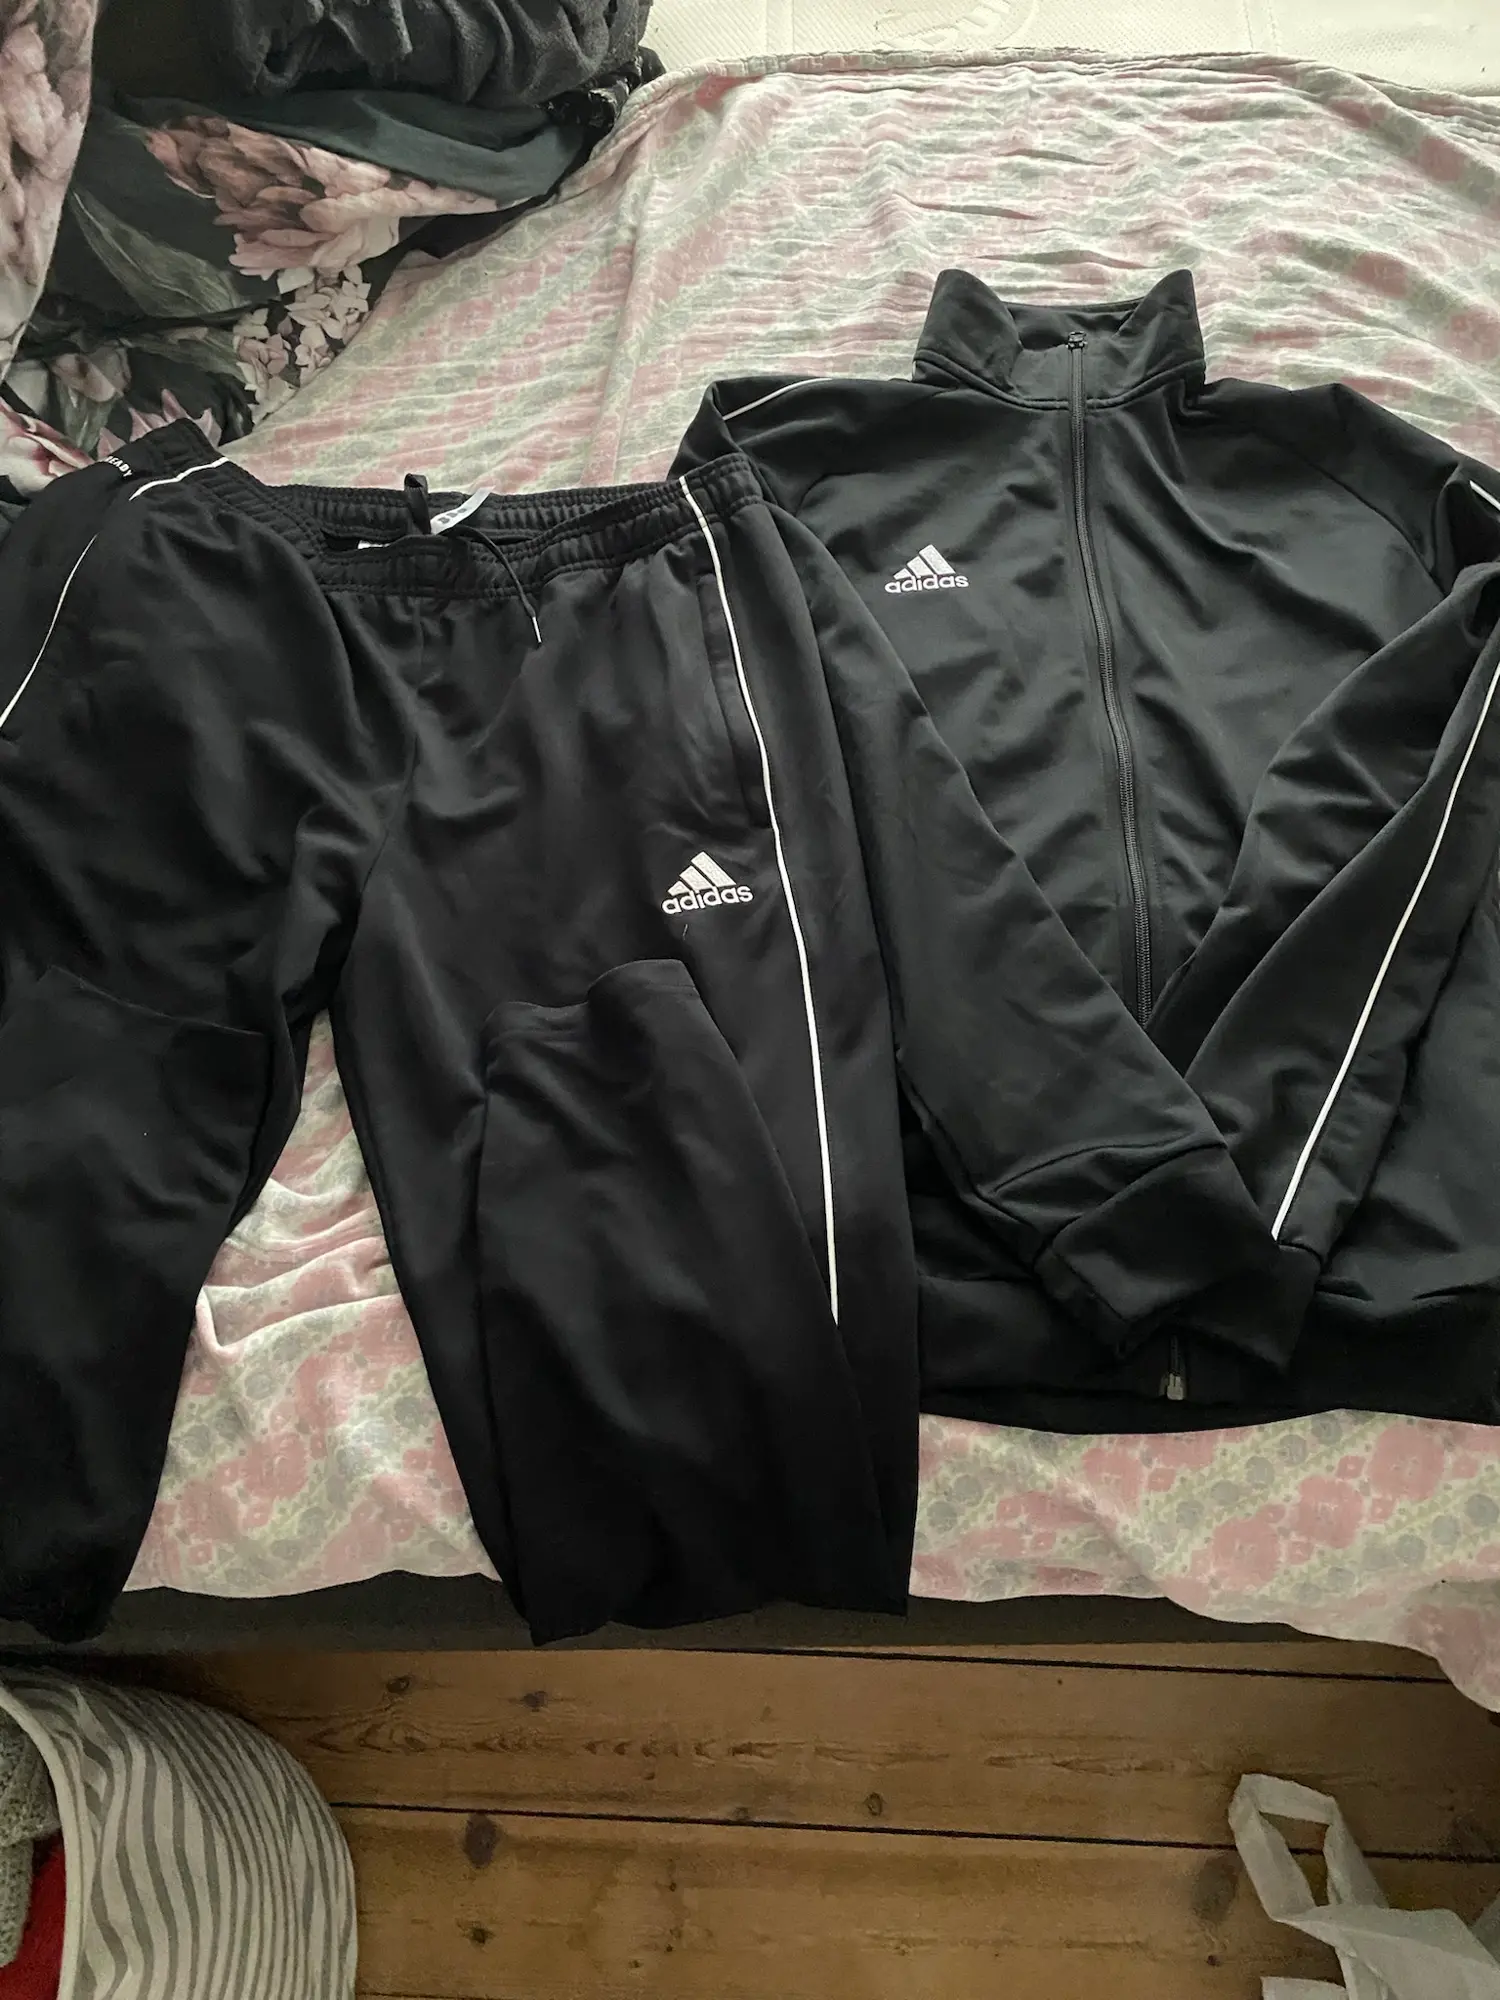 Adidas andet sportstøj